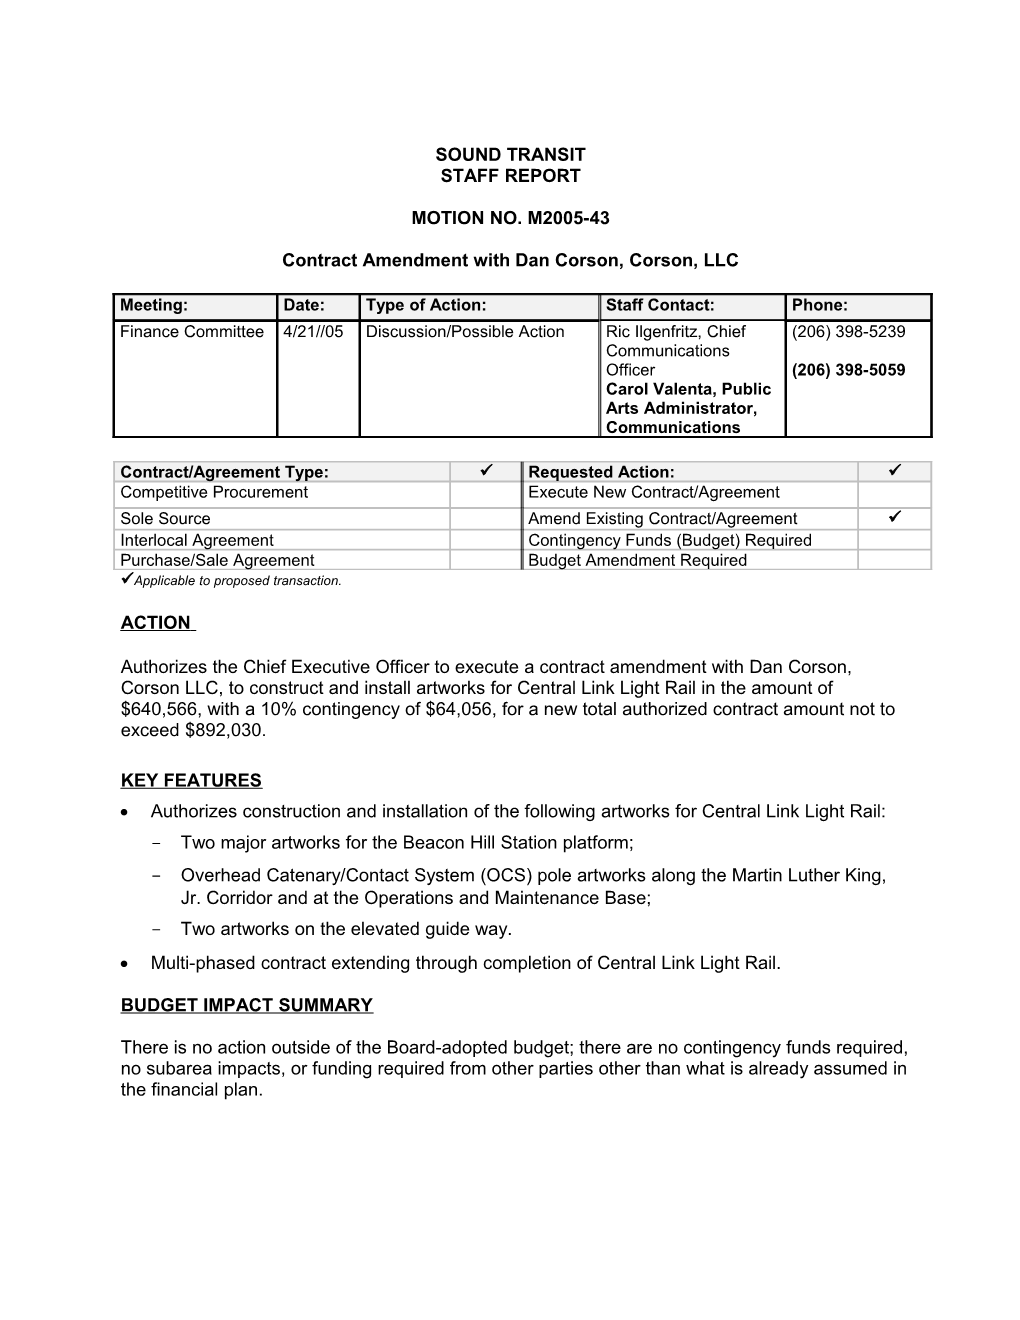 Contract Amendment with Dan Corson, Corson,LLC